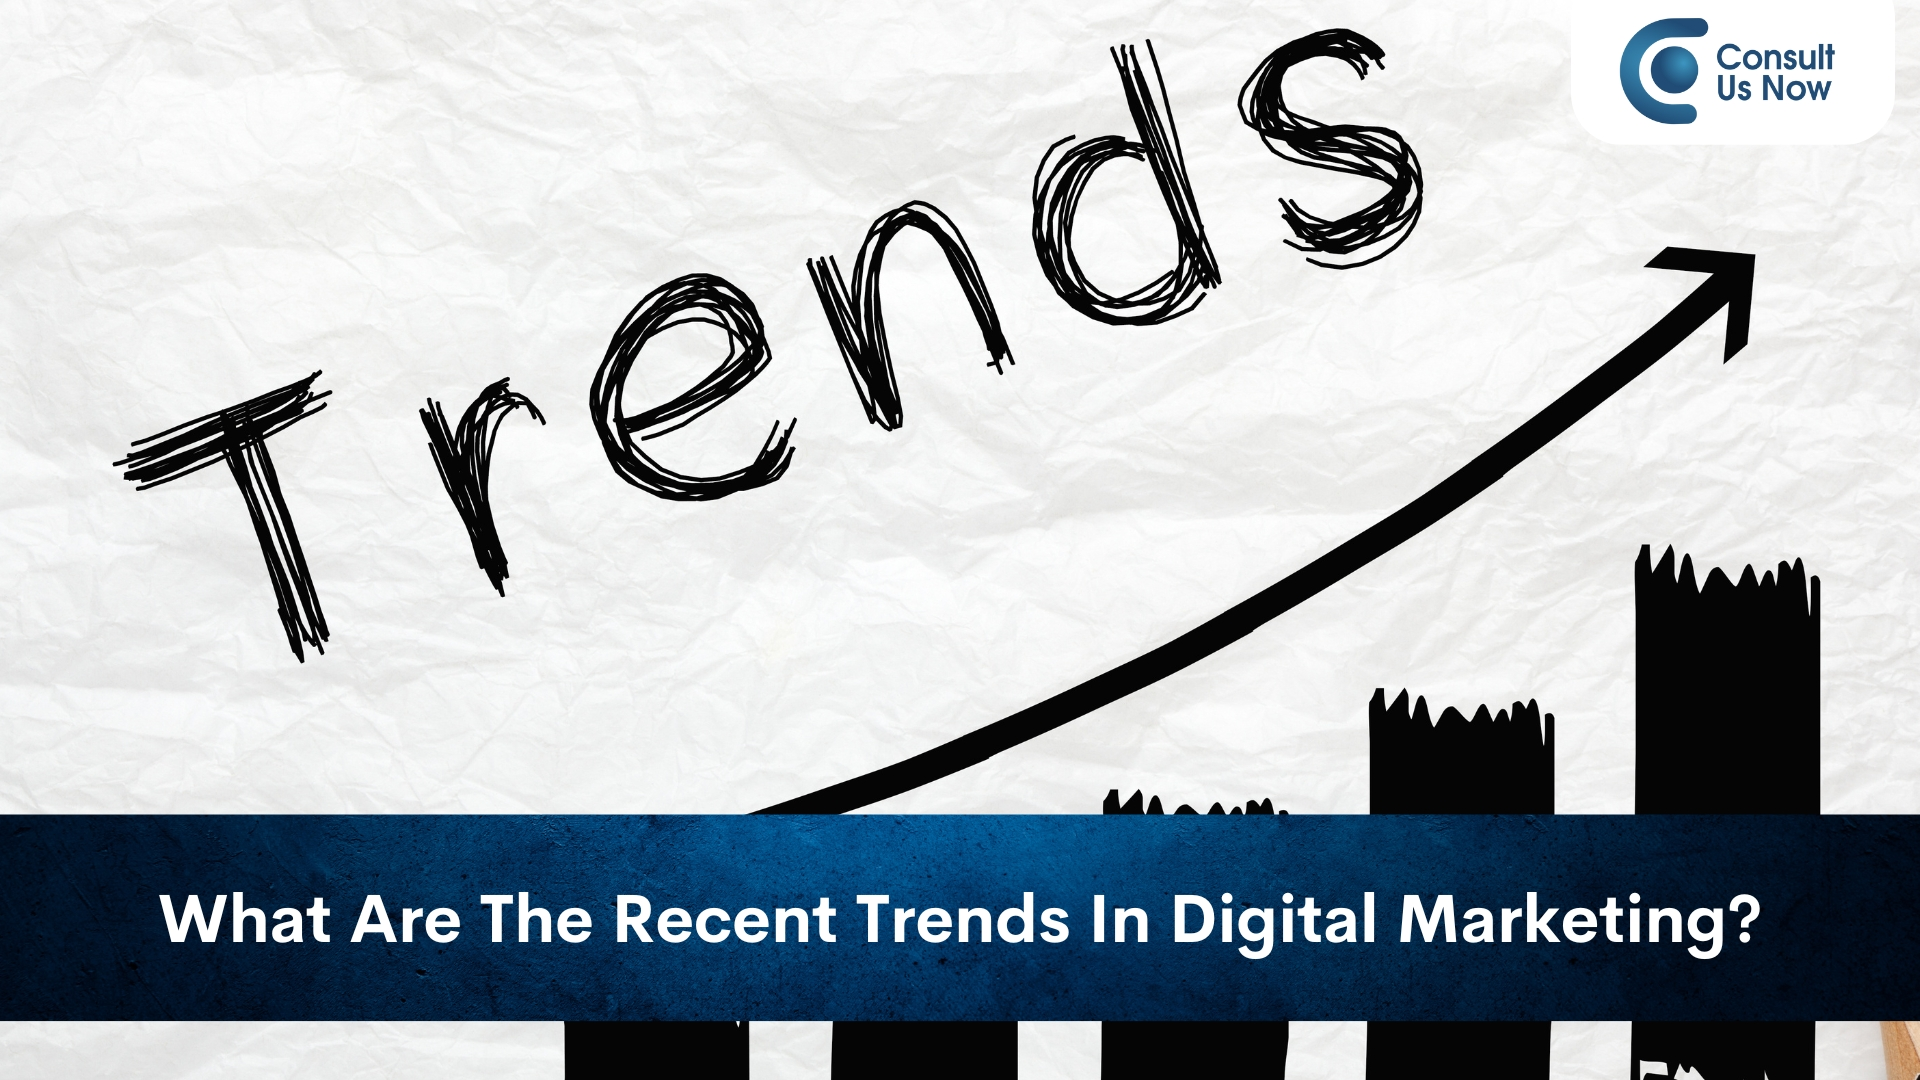 Recent trends in digital marketing